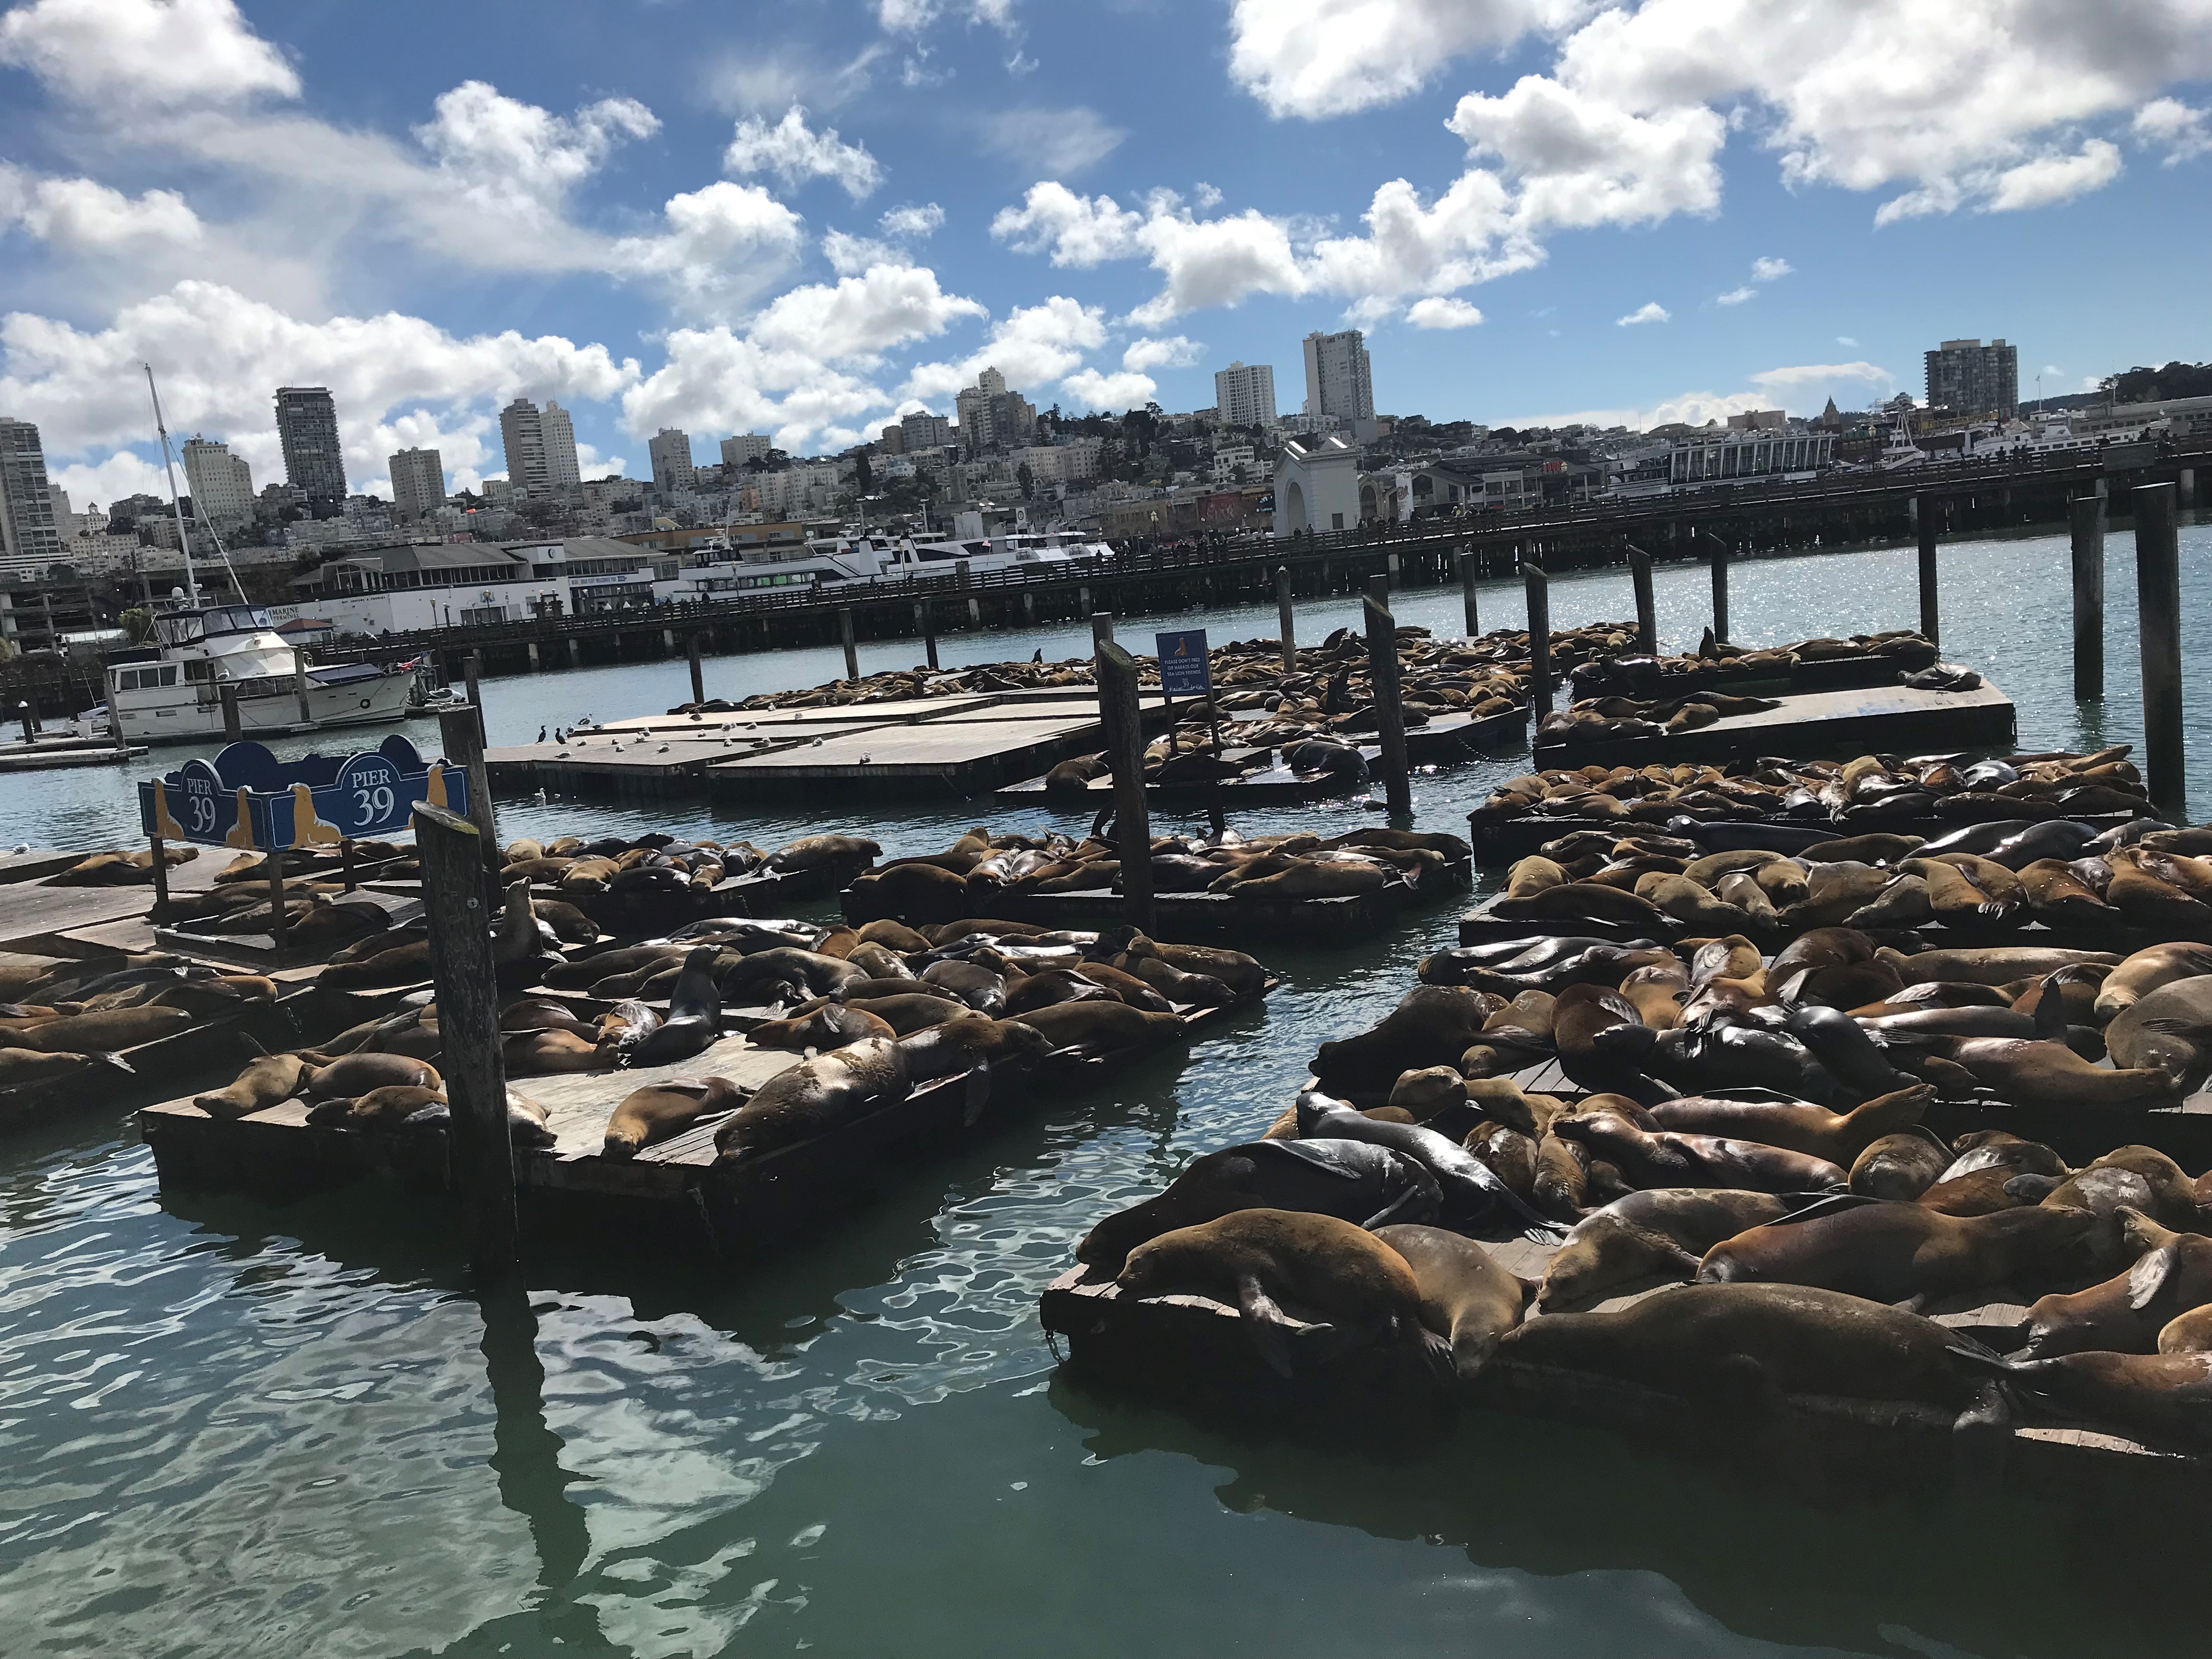 Pier 39 - lots of seal